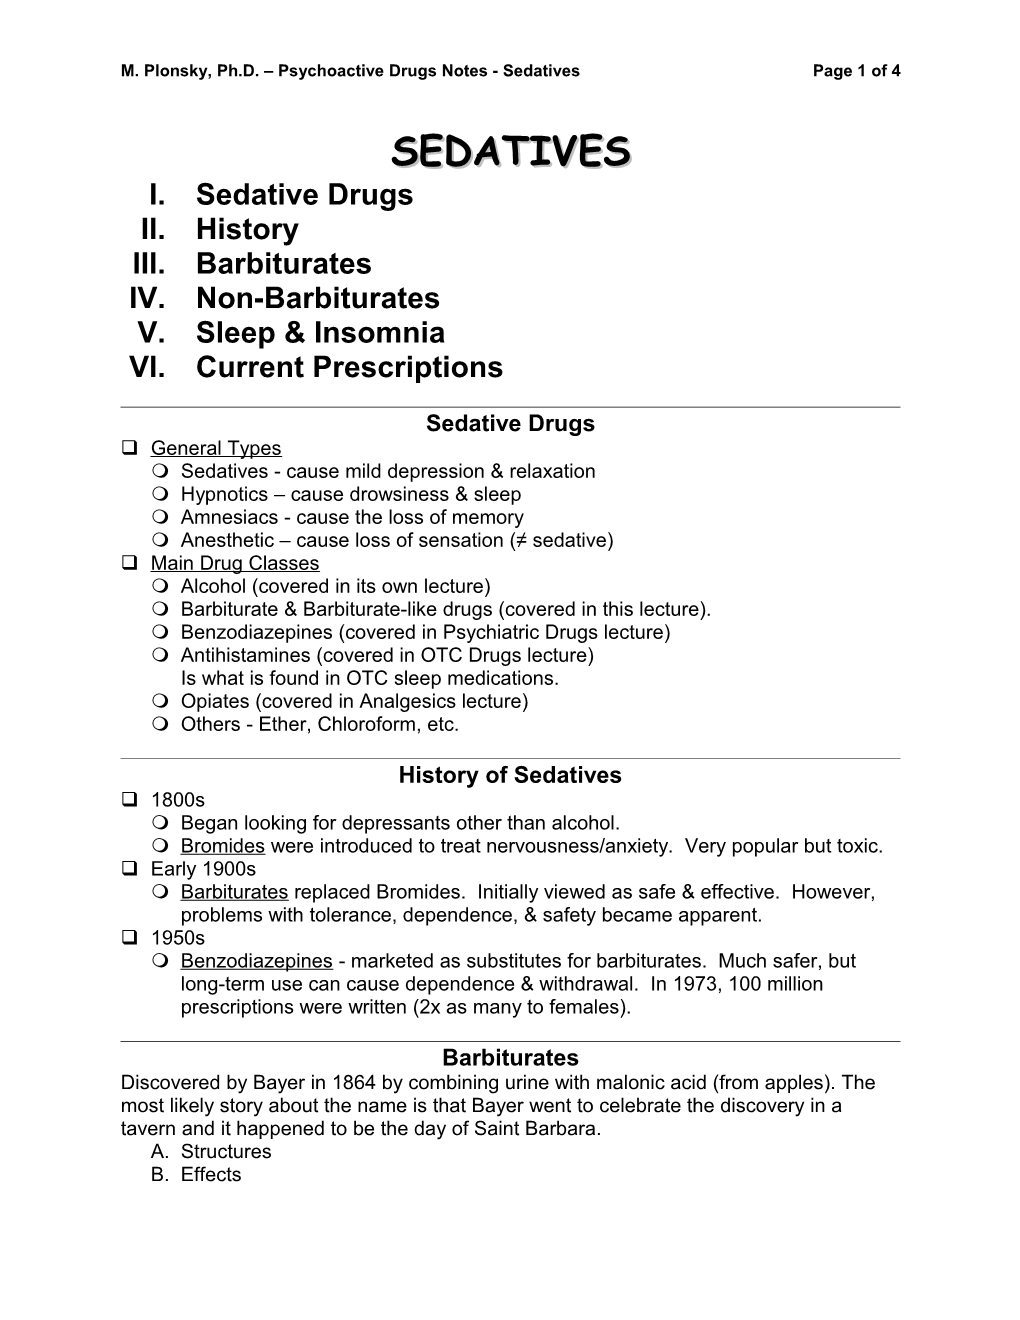 M. Plonsky, Ph.D. Psychoactive Drugs Notes - Sedativespage 1 of 4